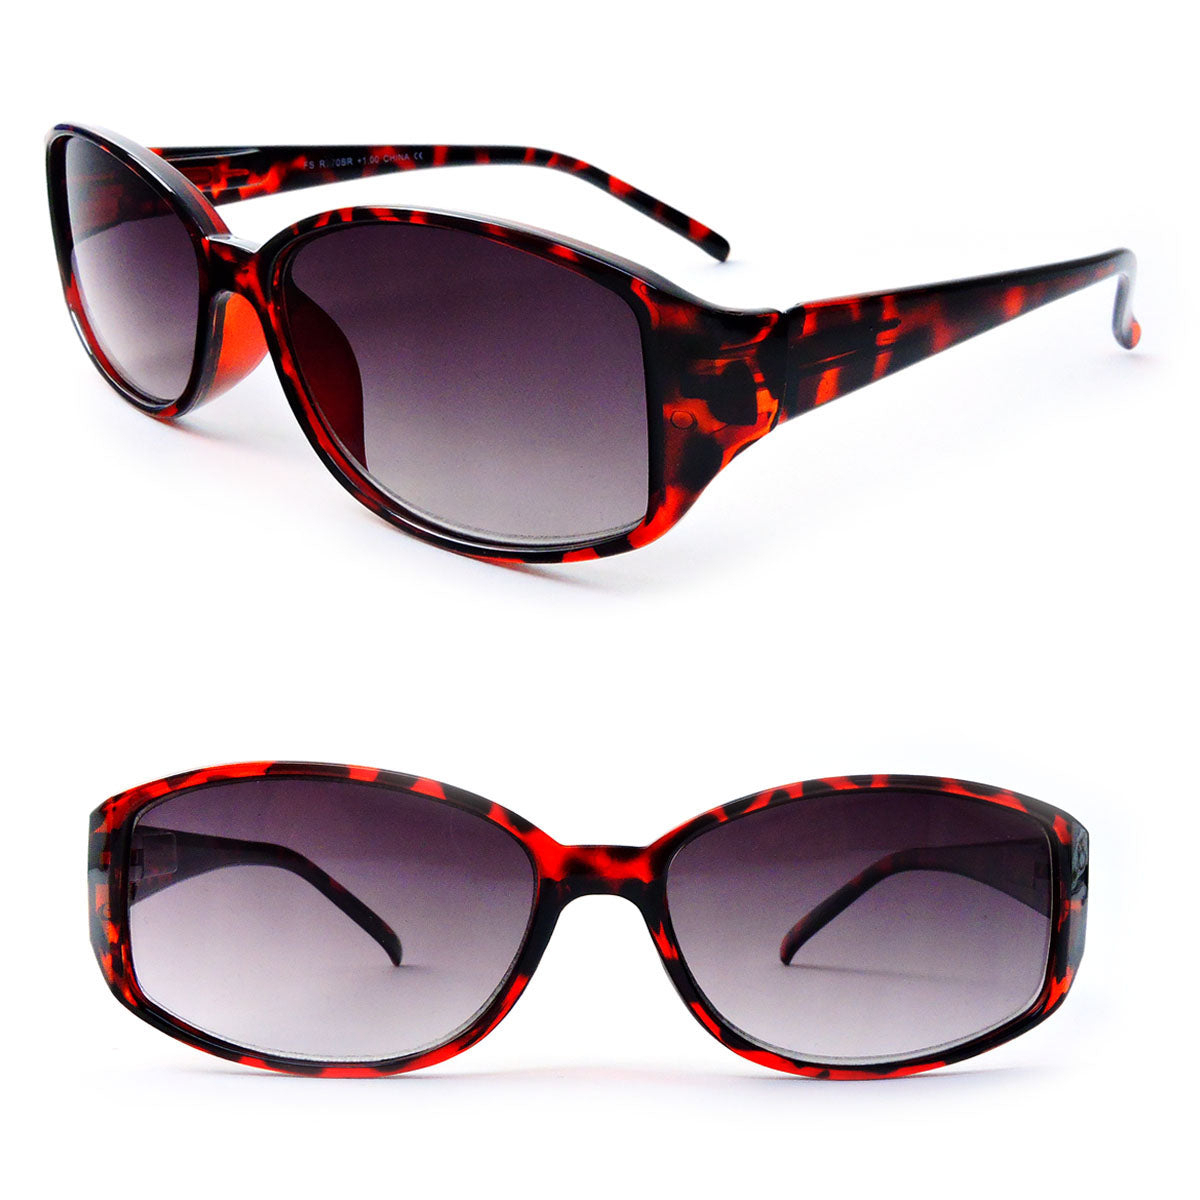 Classic Sun Readers Full Lens Spring Hinges Reading Sunglasses For Women - Brown, +1.50